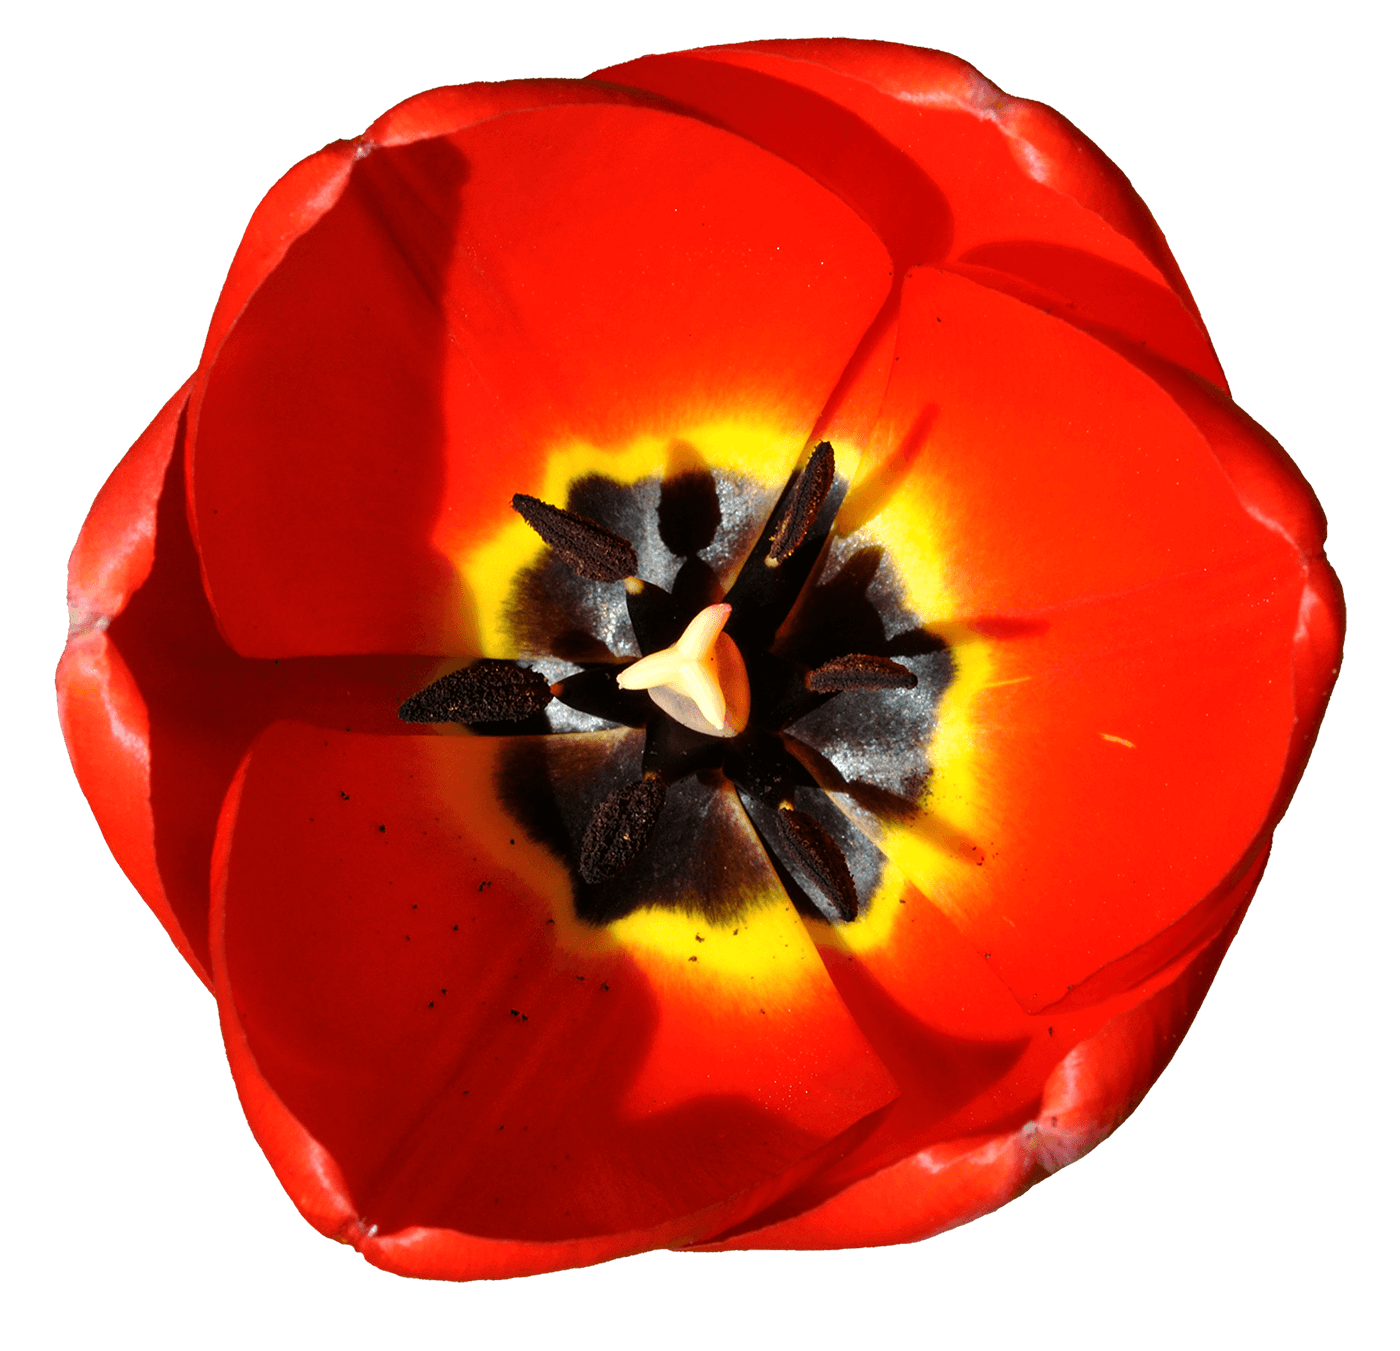 Red Emperor Tulip